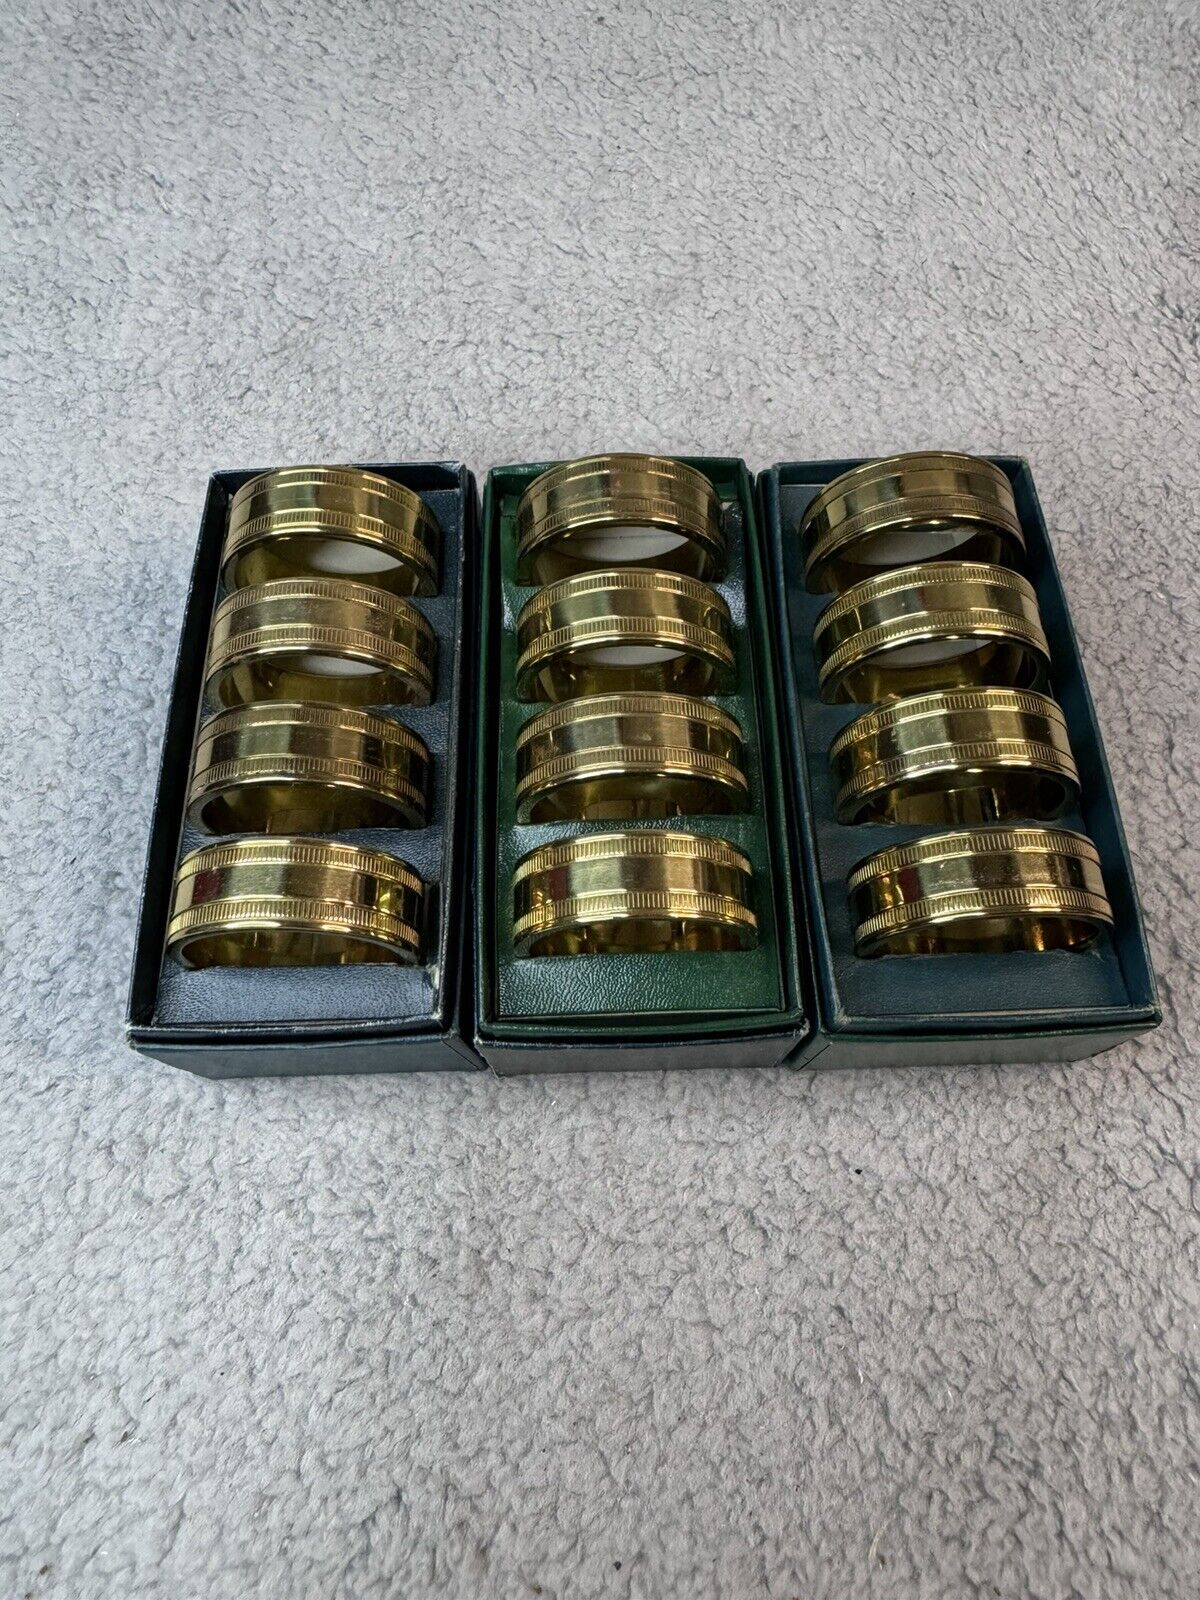 Virginia Metalcrafters Solid Brass Napkin Rings Set Of 12 Original Box Heavy